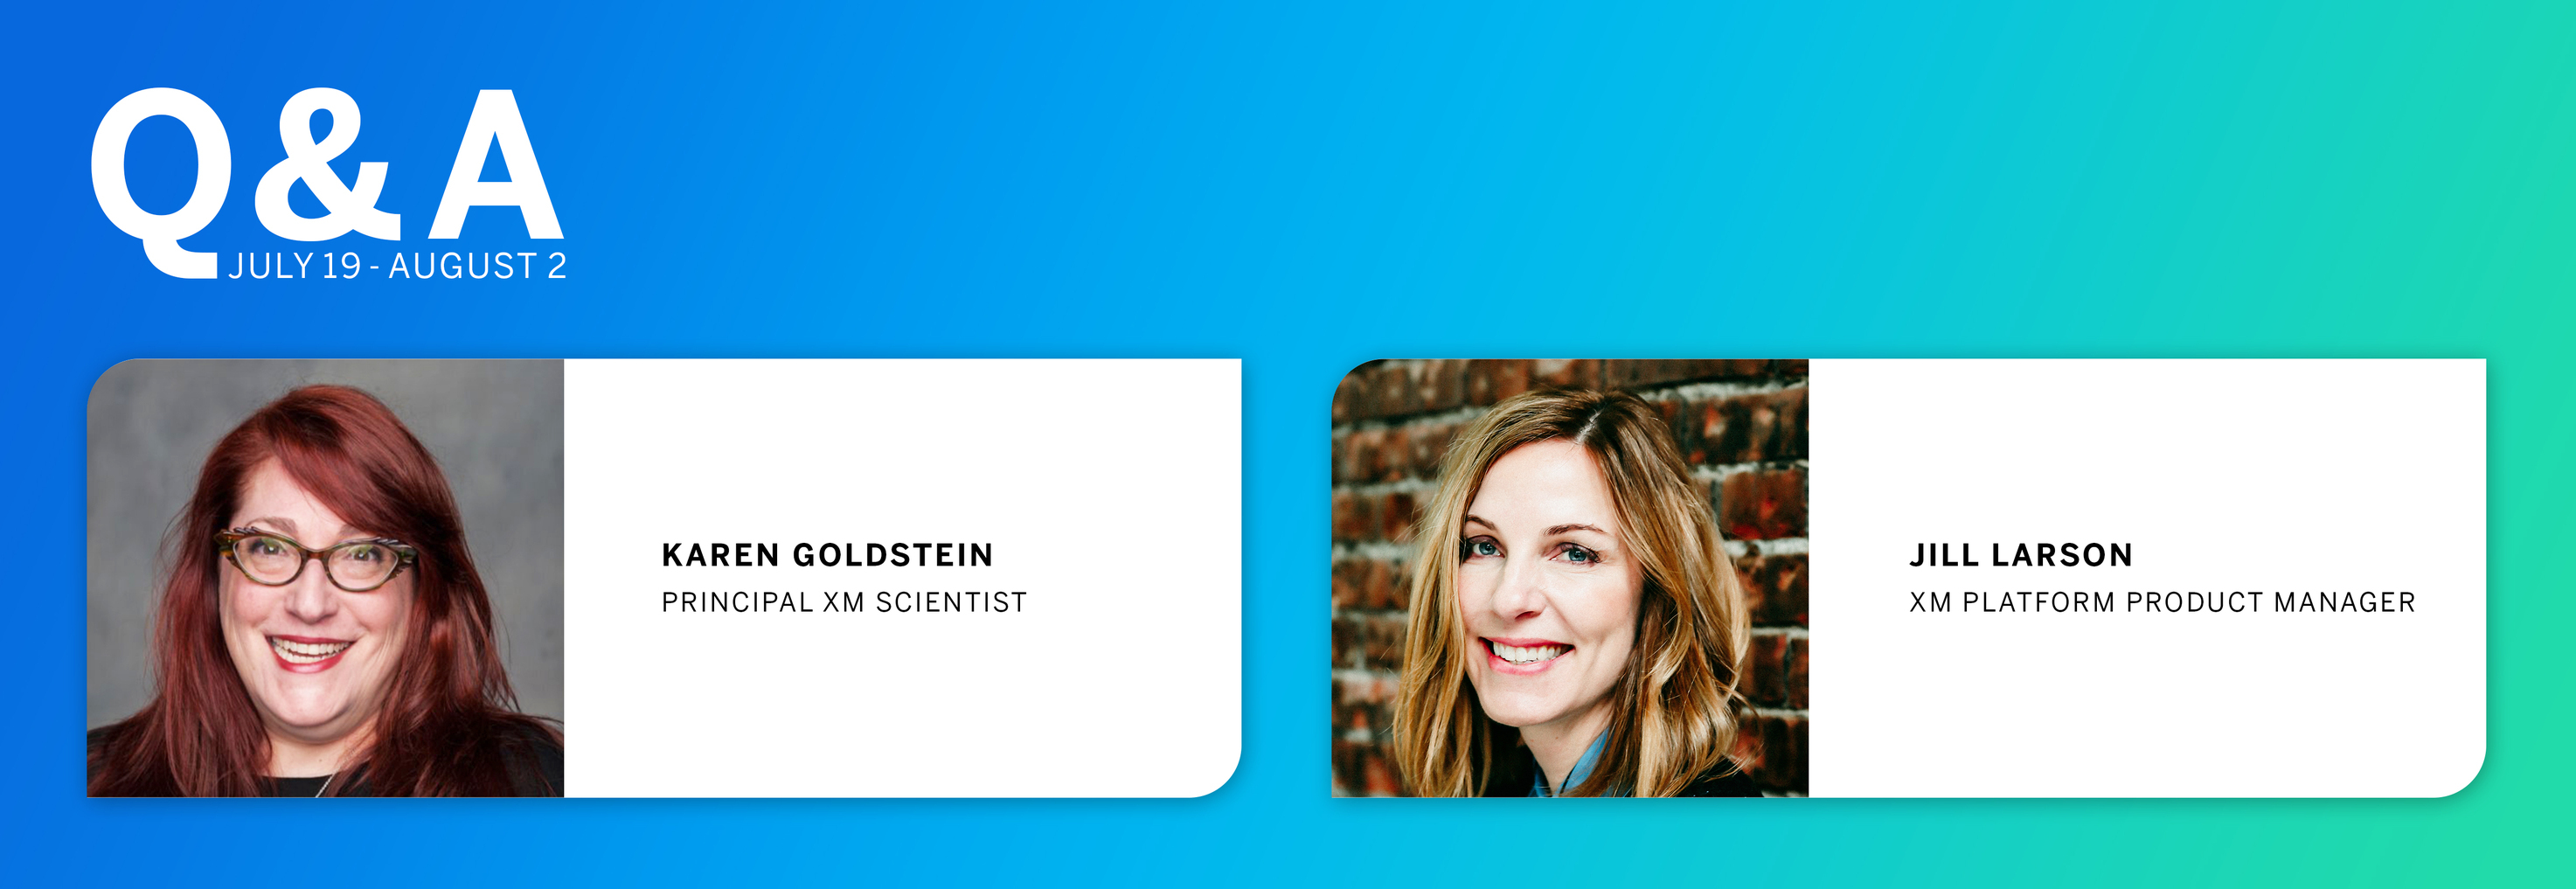 Q&A July 19 - August 2 Featuring Karen Goldstein (Principal XM Scientist) & Jill Larson (XM Platform Product Manager)